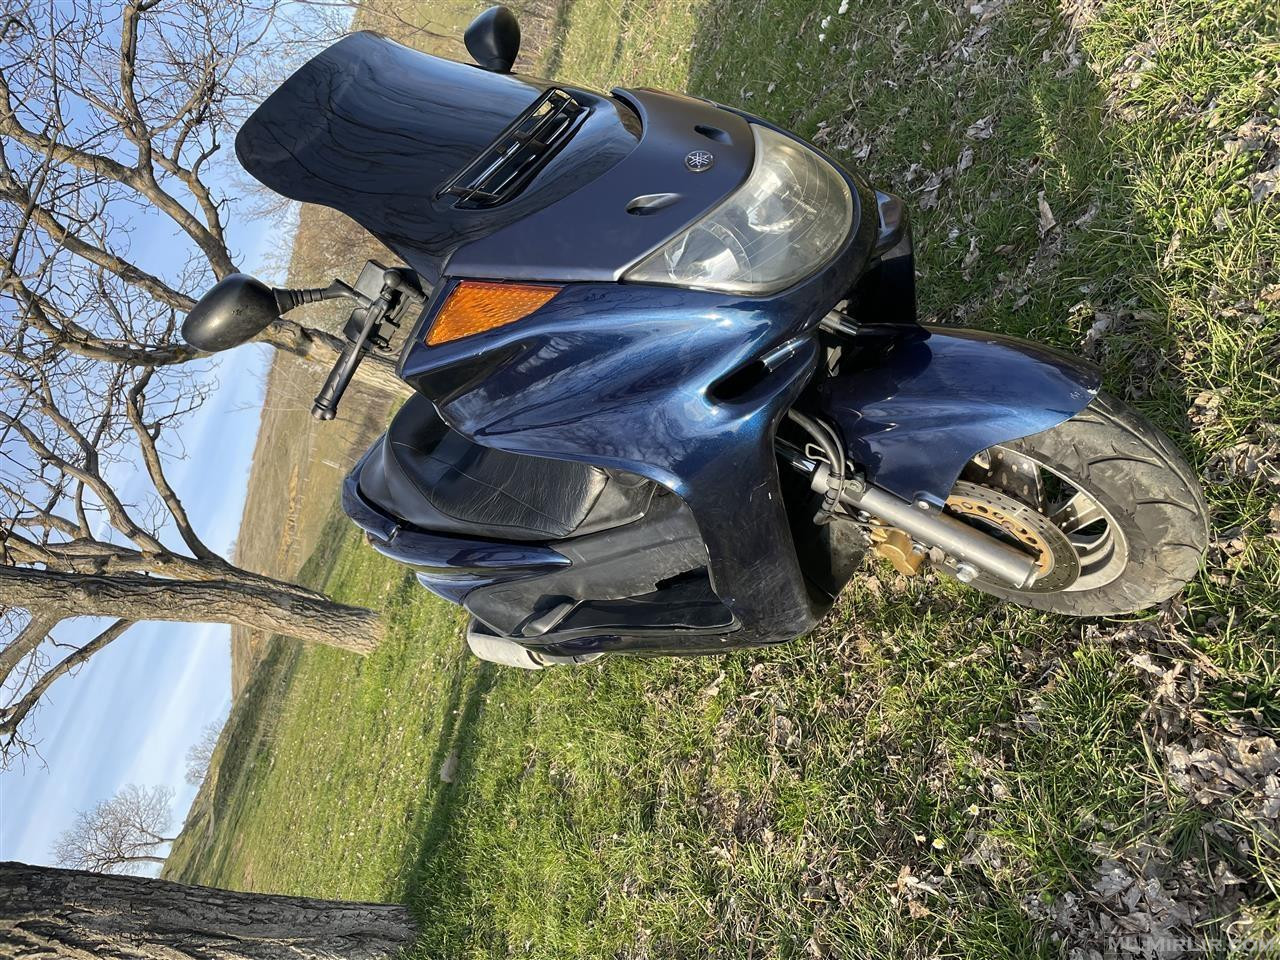 Yamaha mayestik 250cc